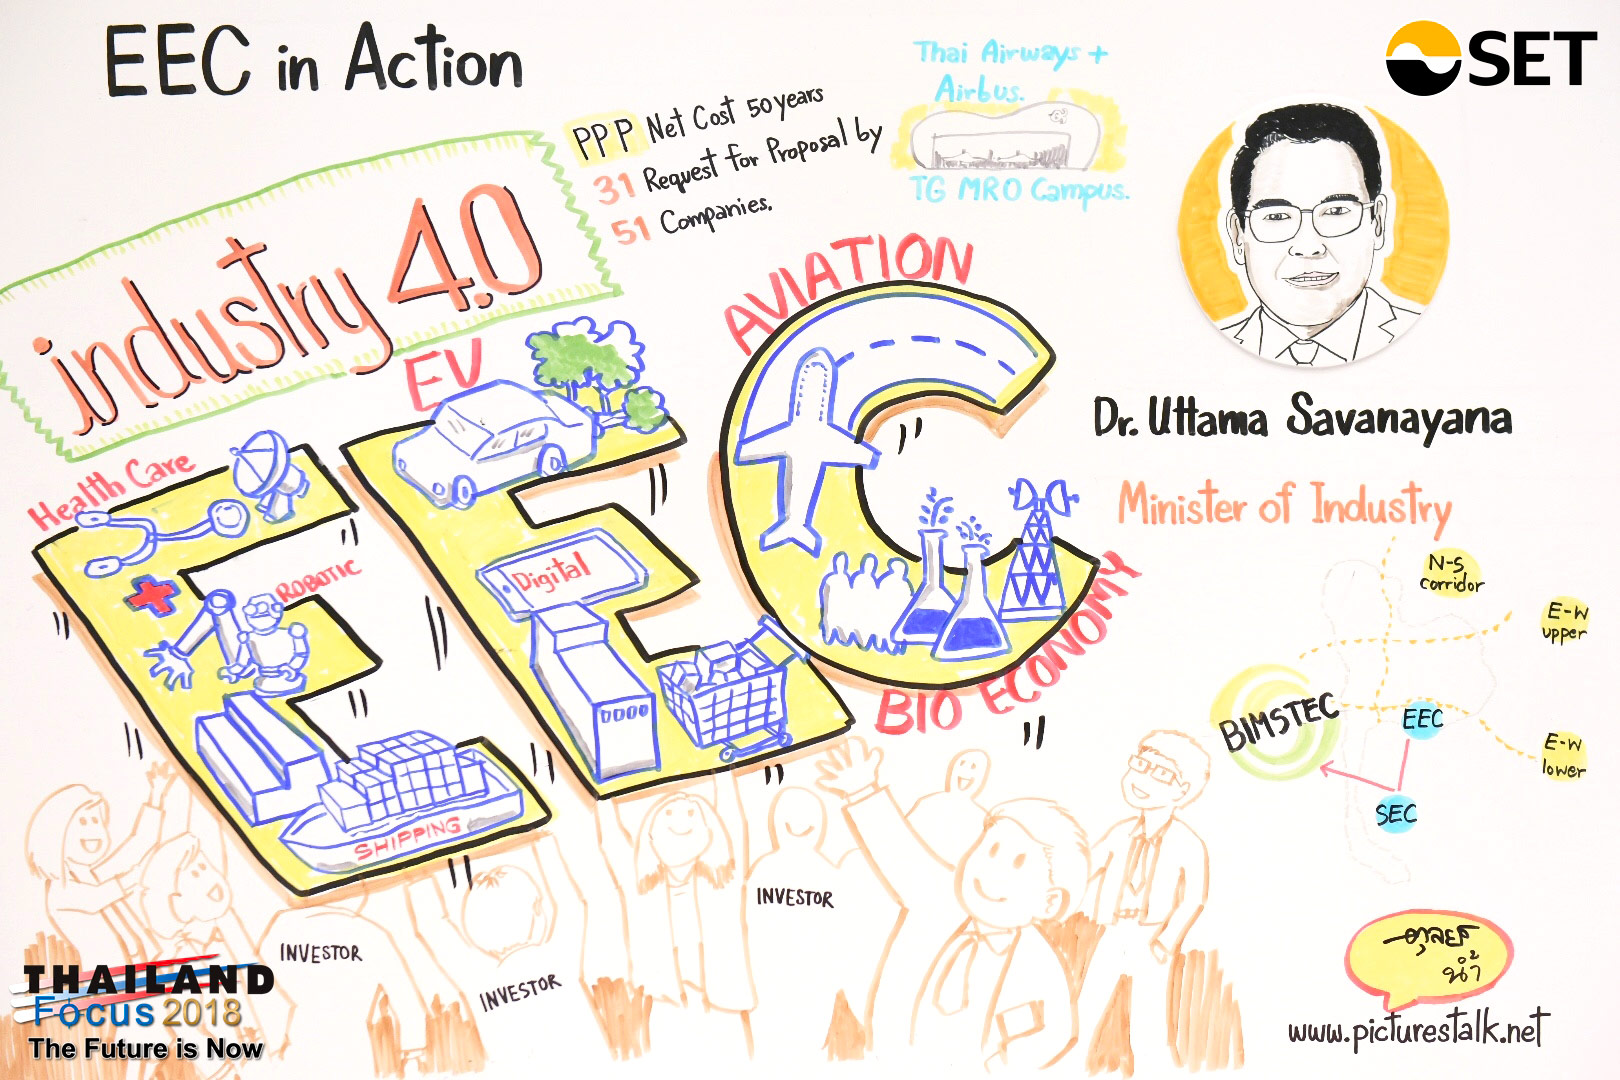 Thailand Focus 2018 - EEC in Action - Dr. Uttama Savanayana